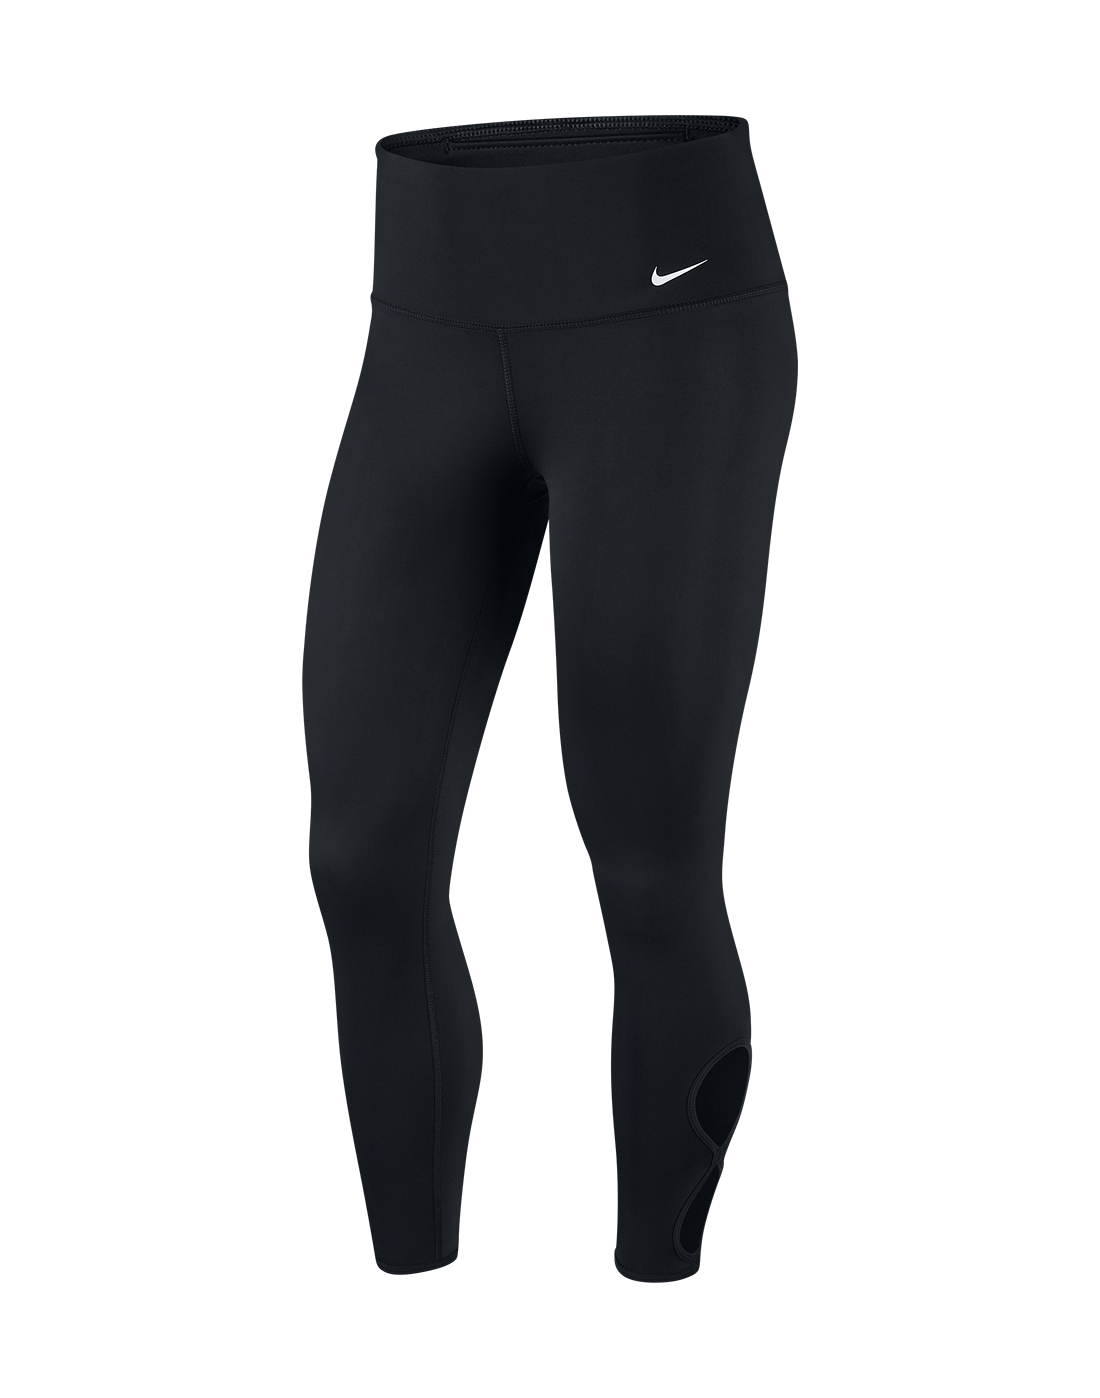 Nike Womens Yoga 7/8 Leggings - Black | Life Style Sports IE